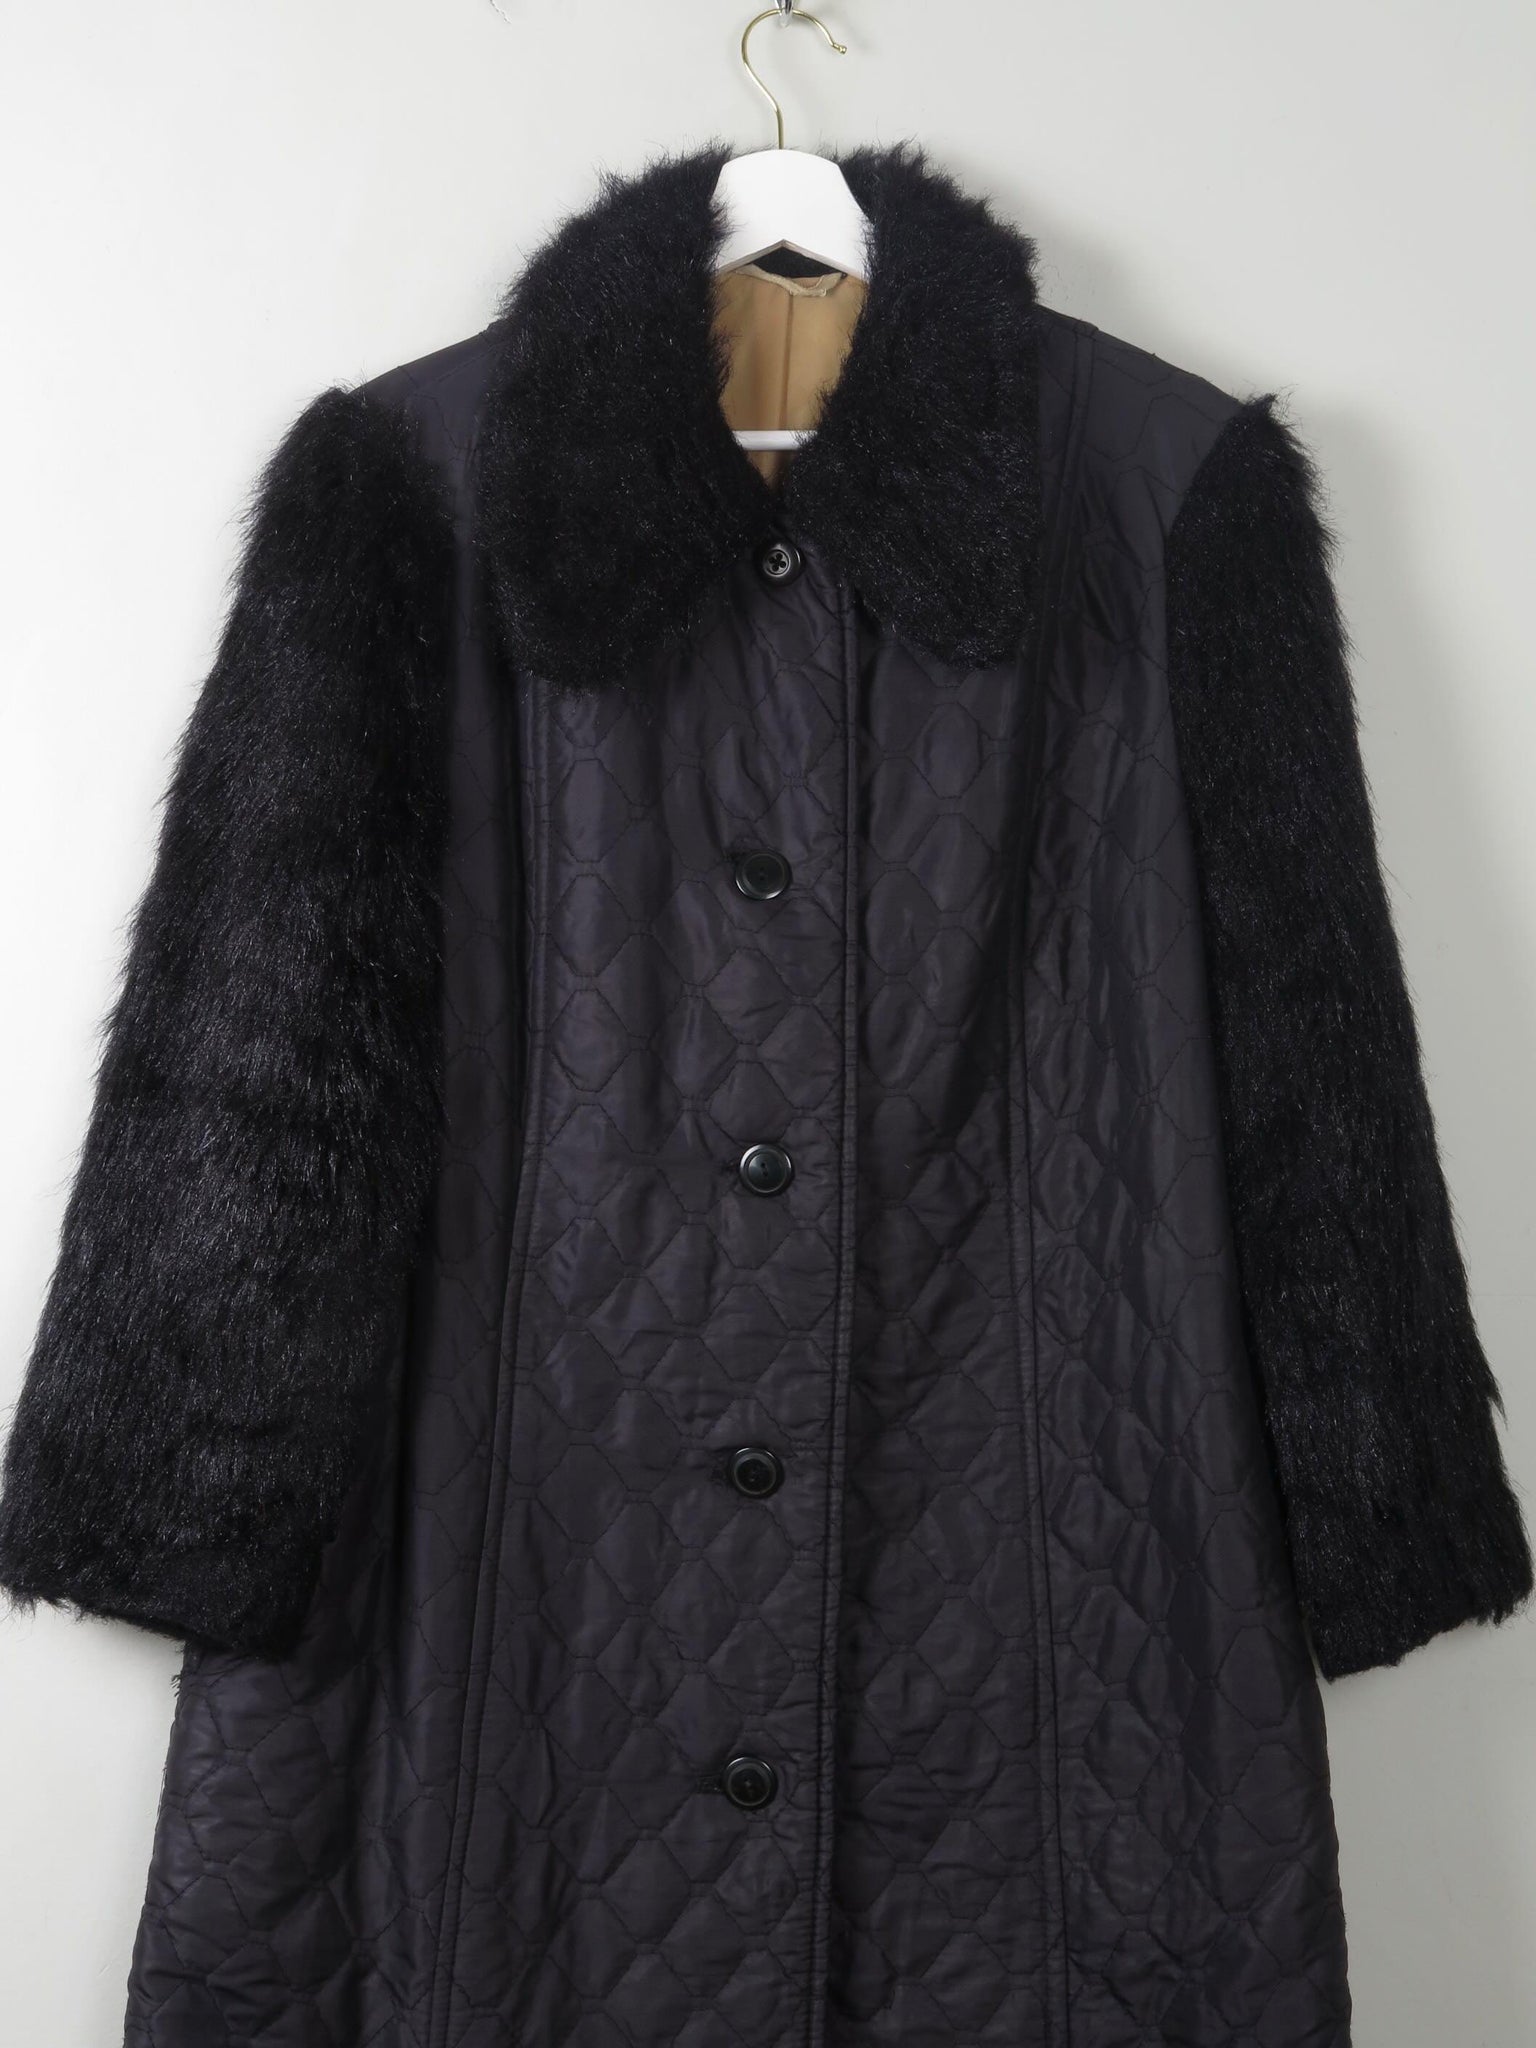 Women's Black Vintage Quilted Coat M - The Harlequin